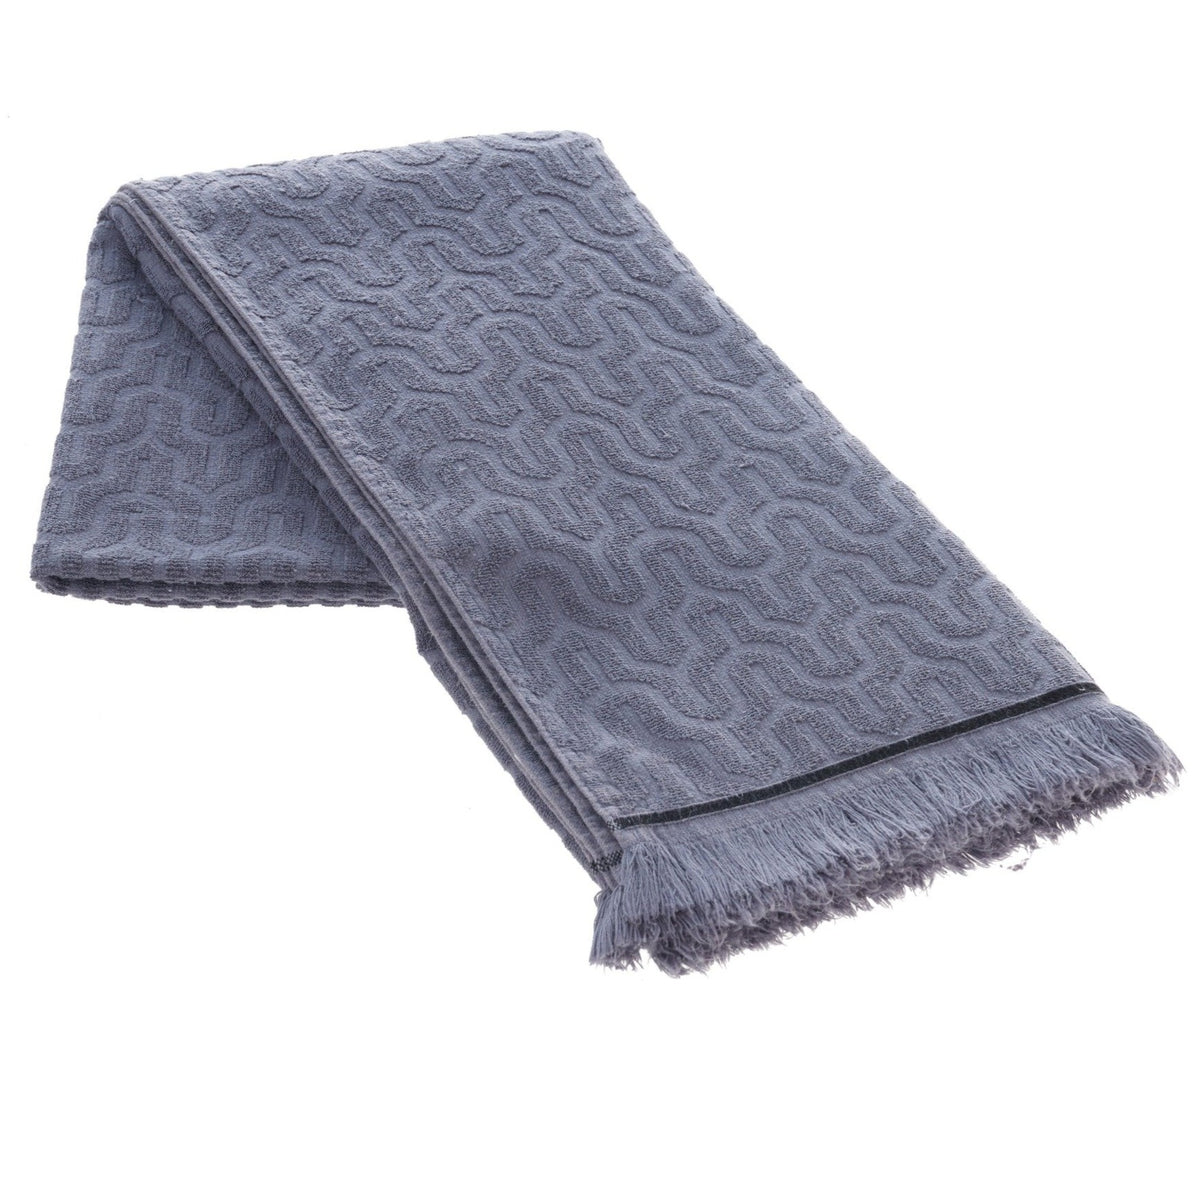 SALE - Turkish Towel, Iris